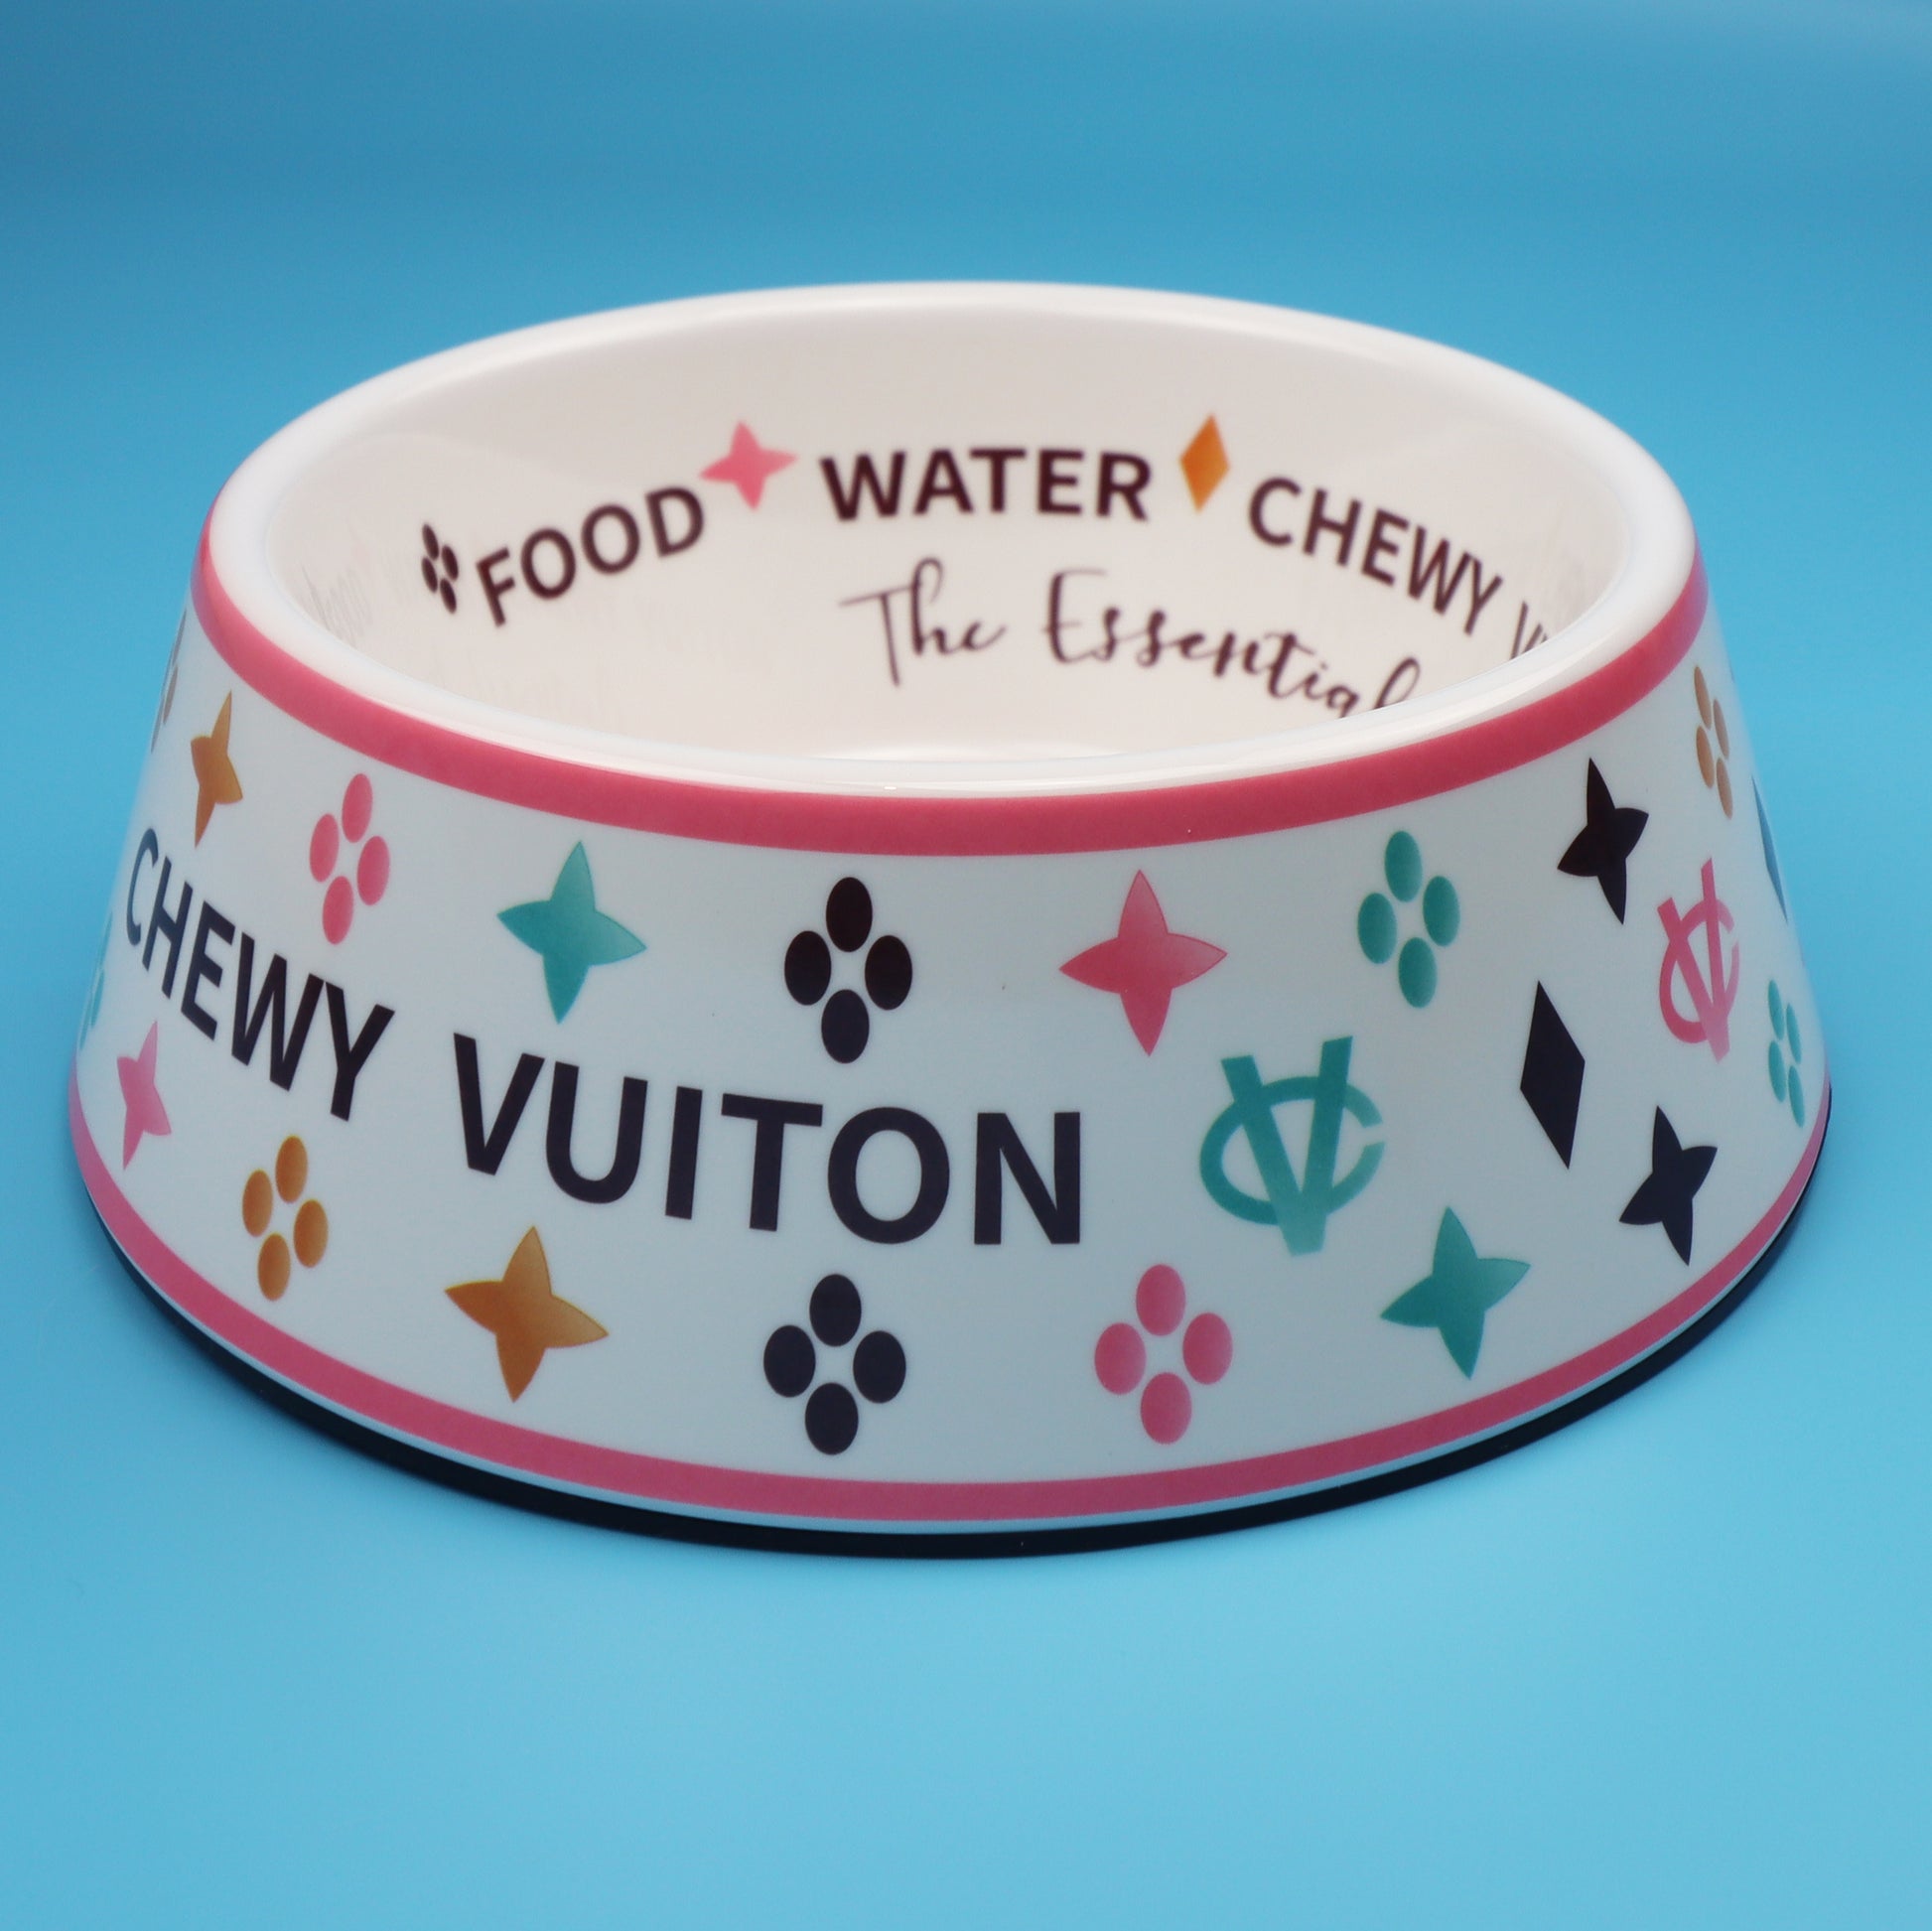 Chewy Vuitton Monogram Feeding Bowl